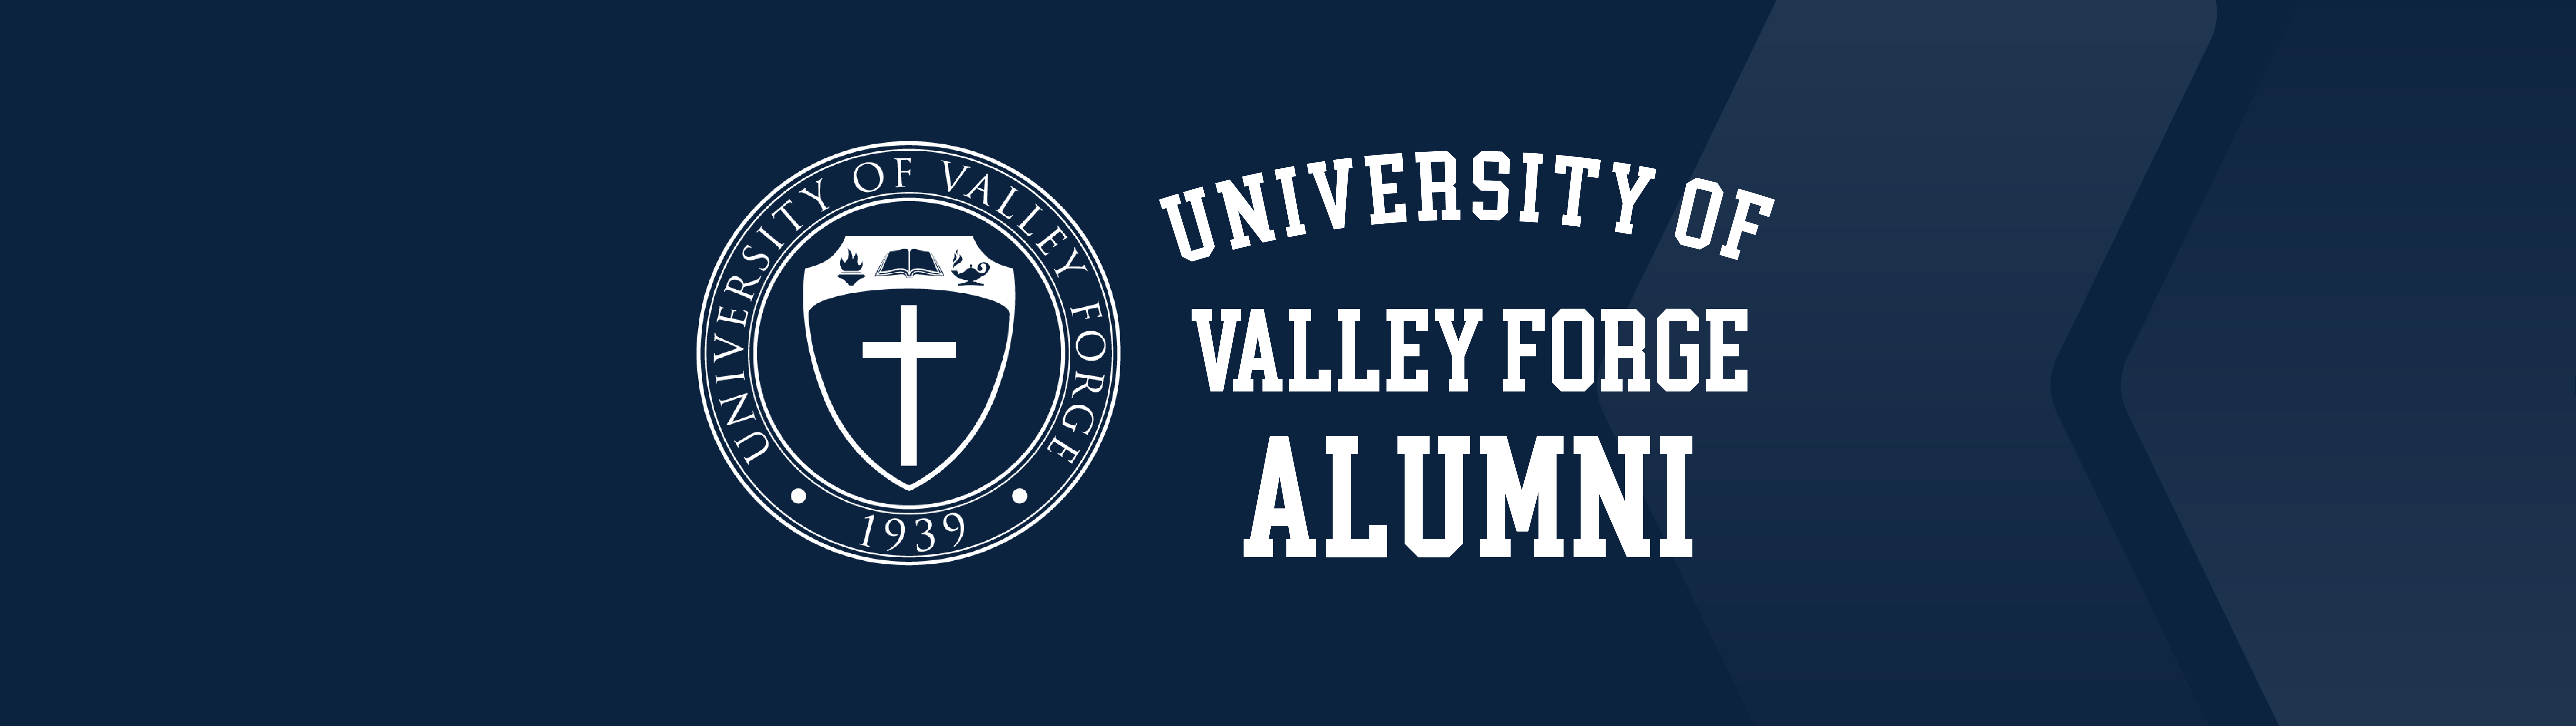 Alumni University of Valley